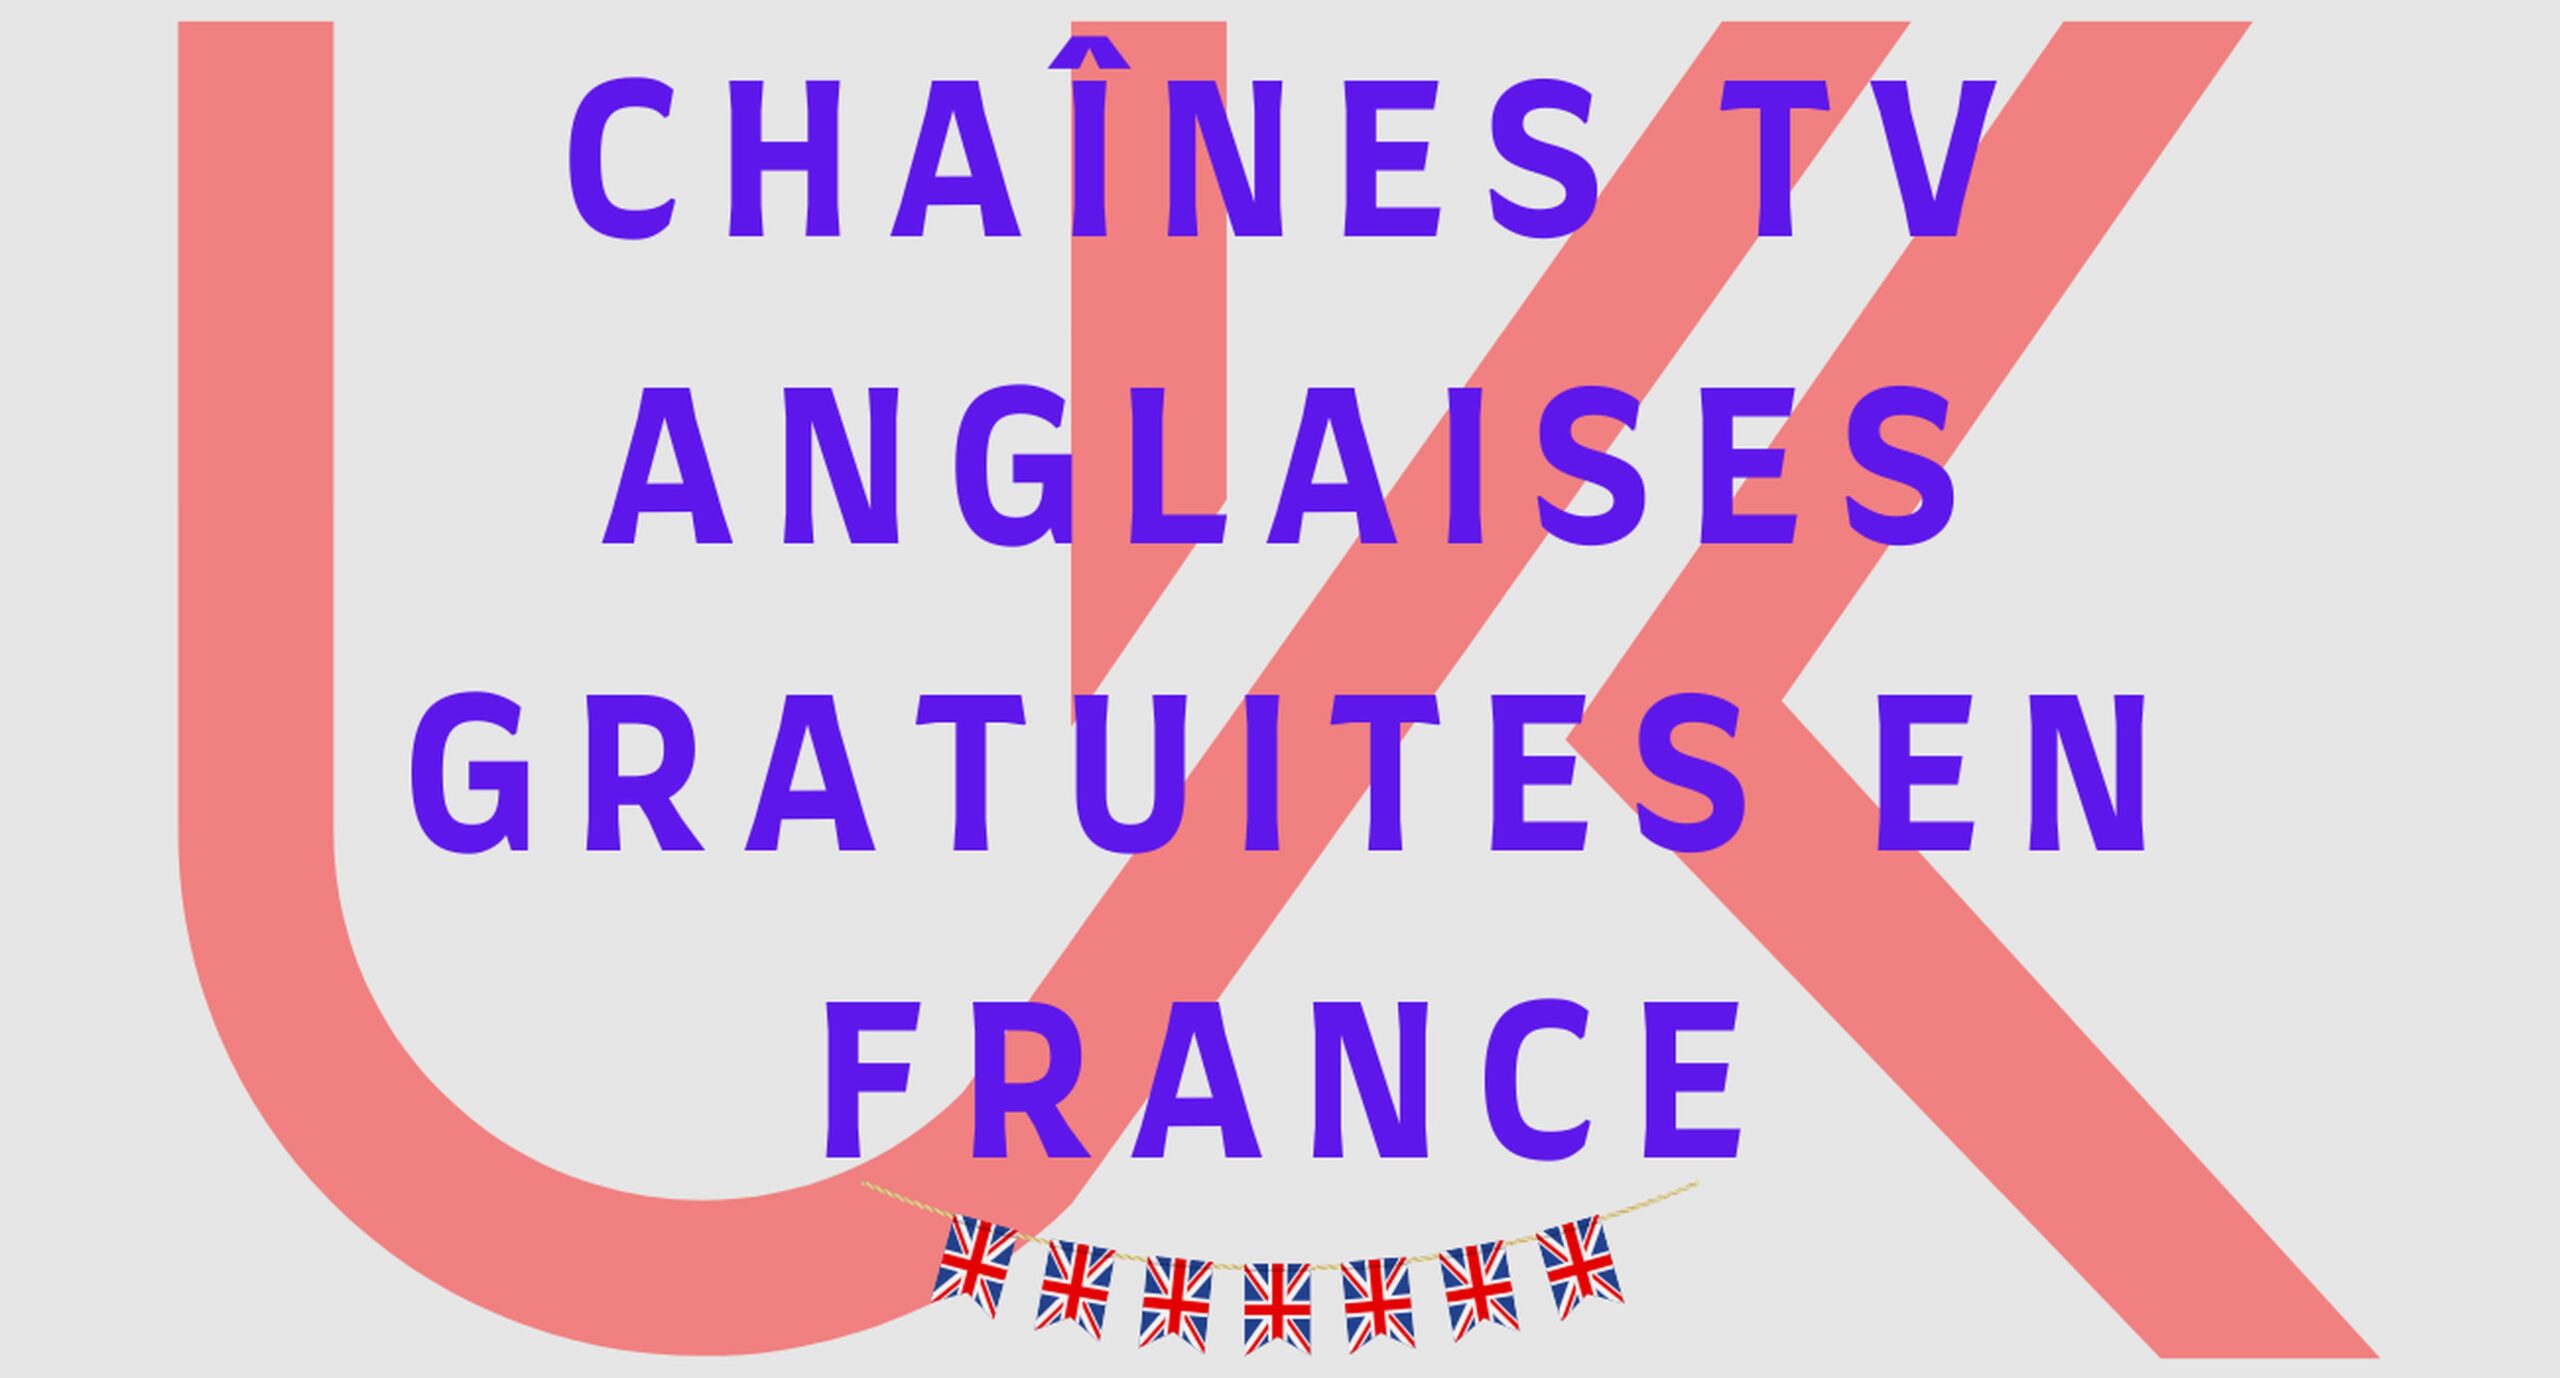 Chaînes TV Anglaises gratuites en France - 55 Chaînes TV disponibles 6